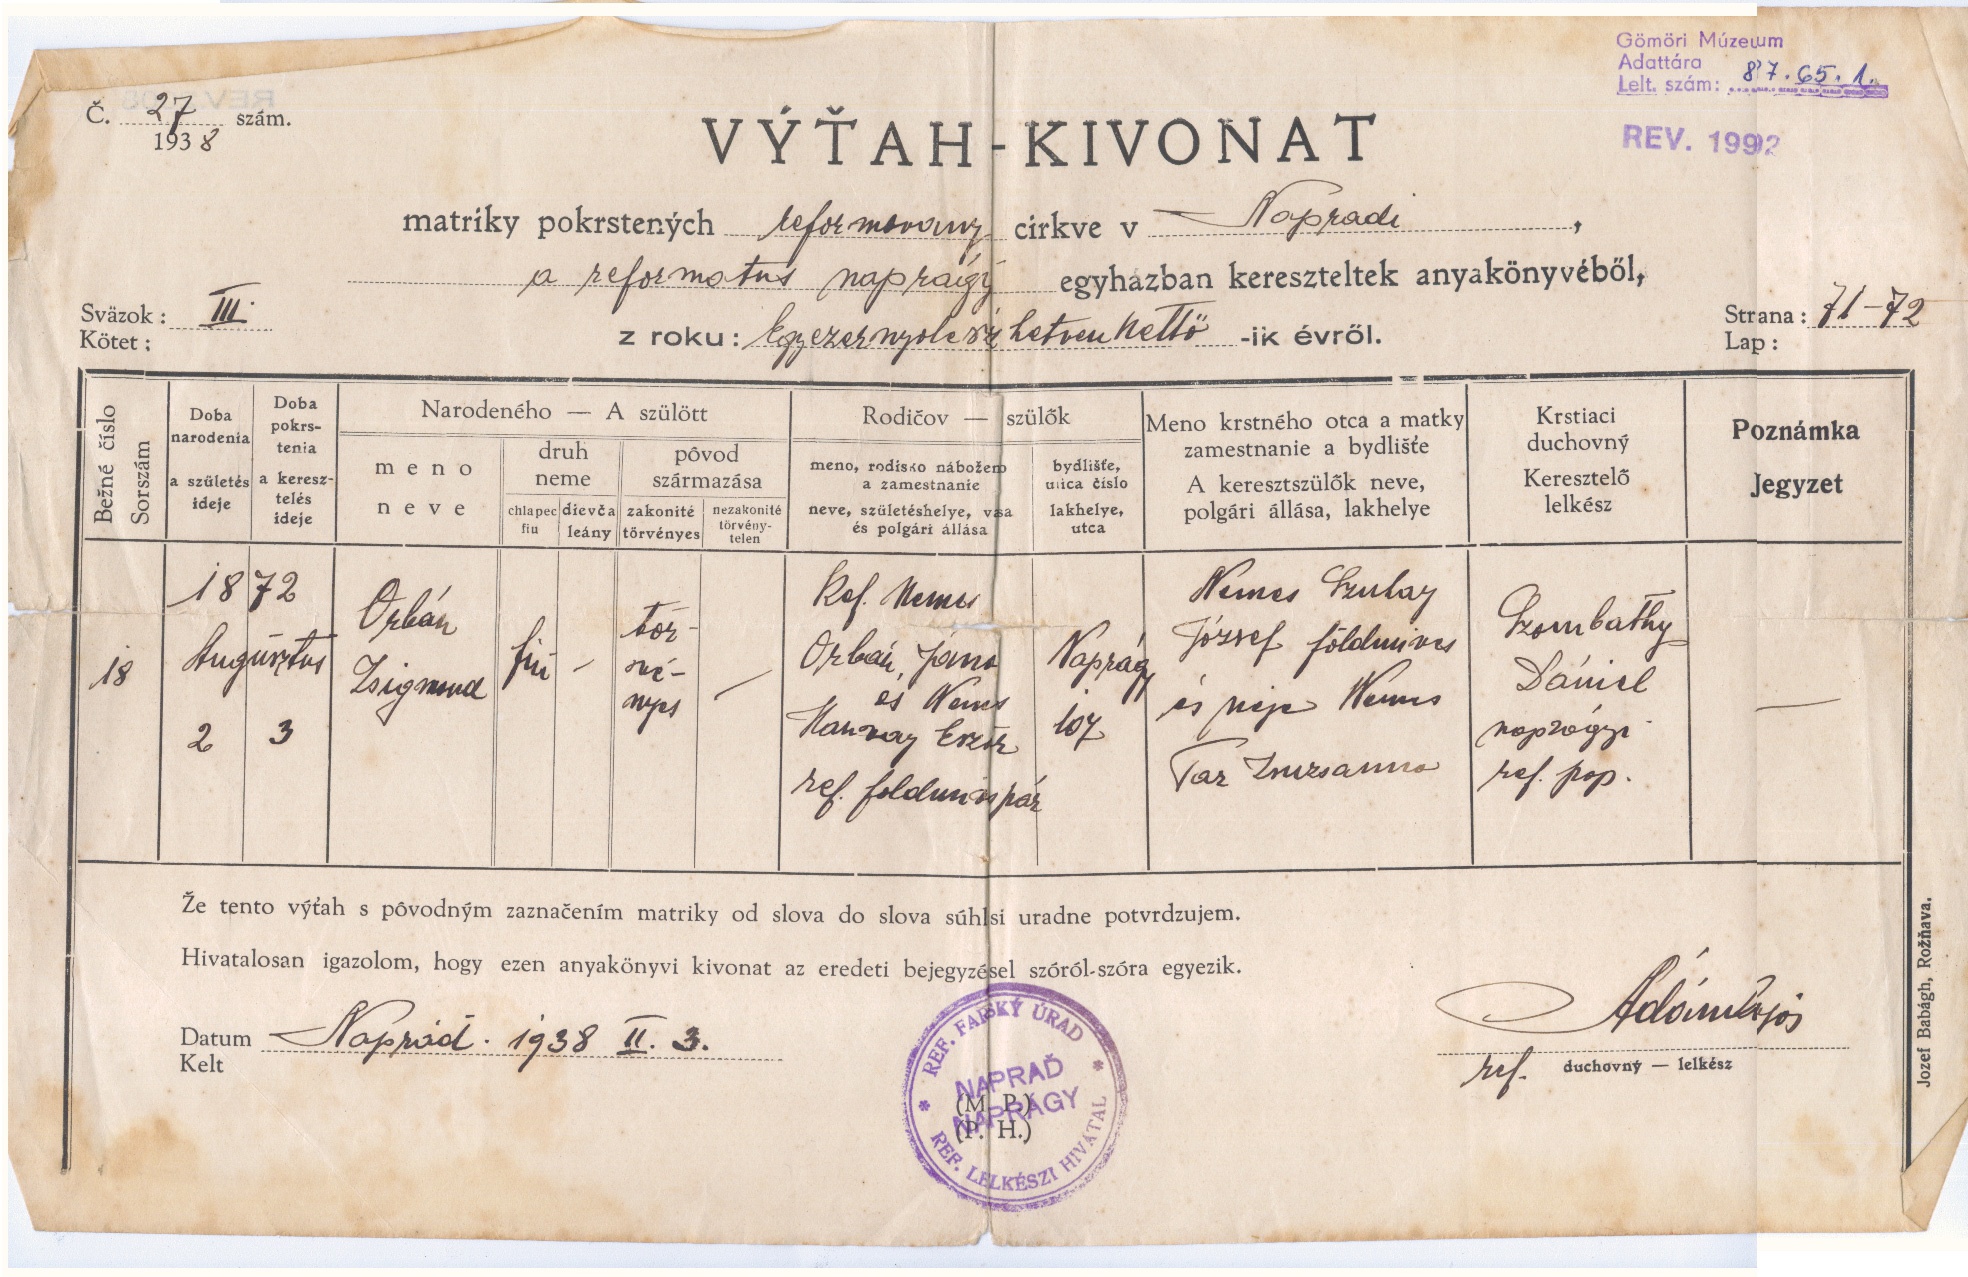 Anyakönyvi kivonat 1938 (Gömöri Múzeum, Putnok CC BY-NC-SA)